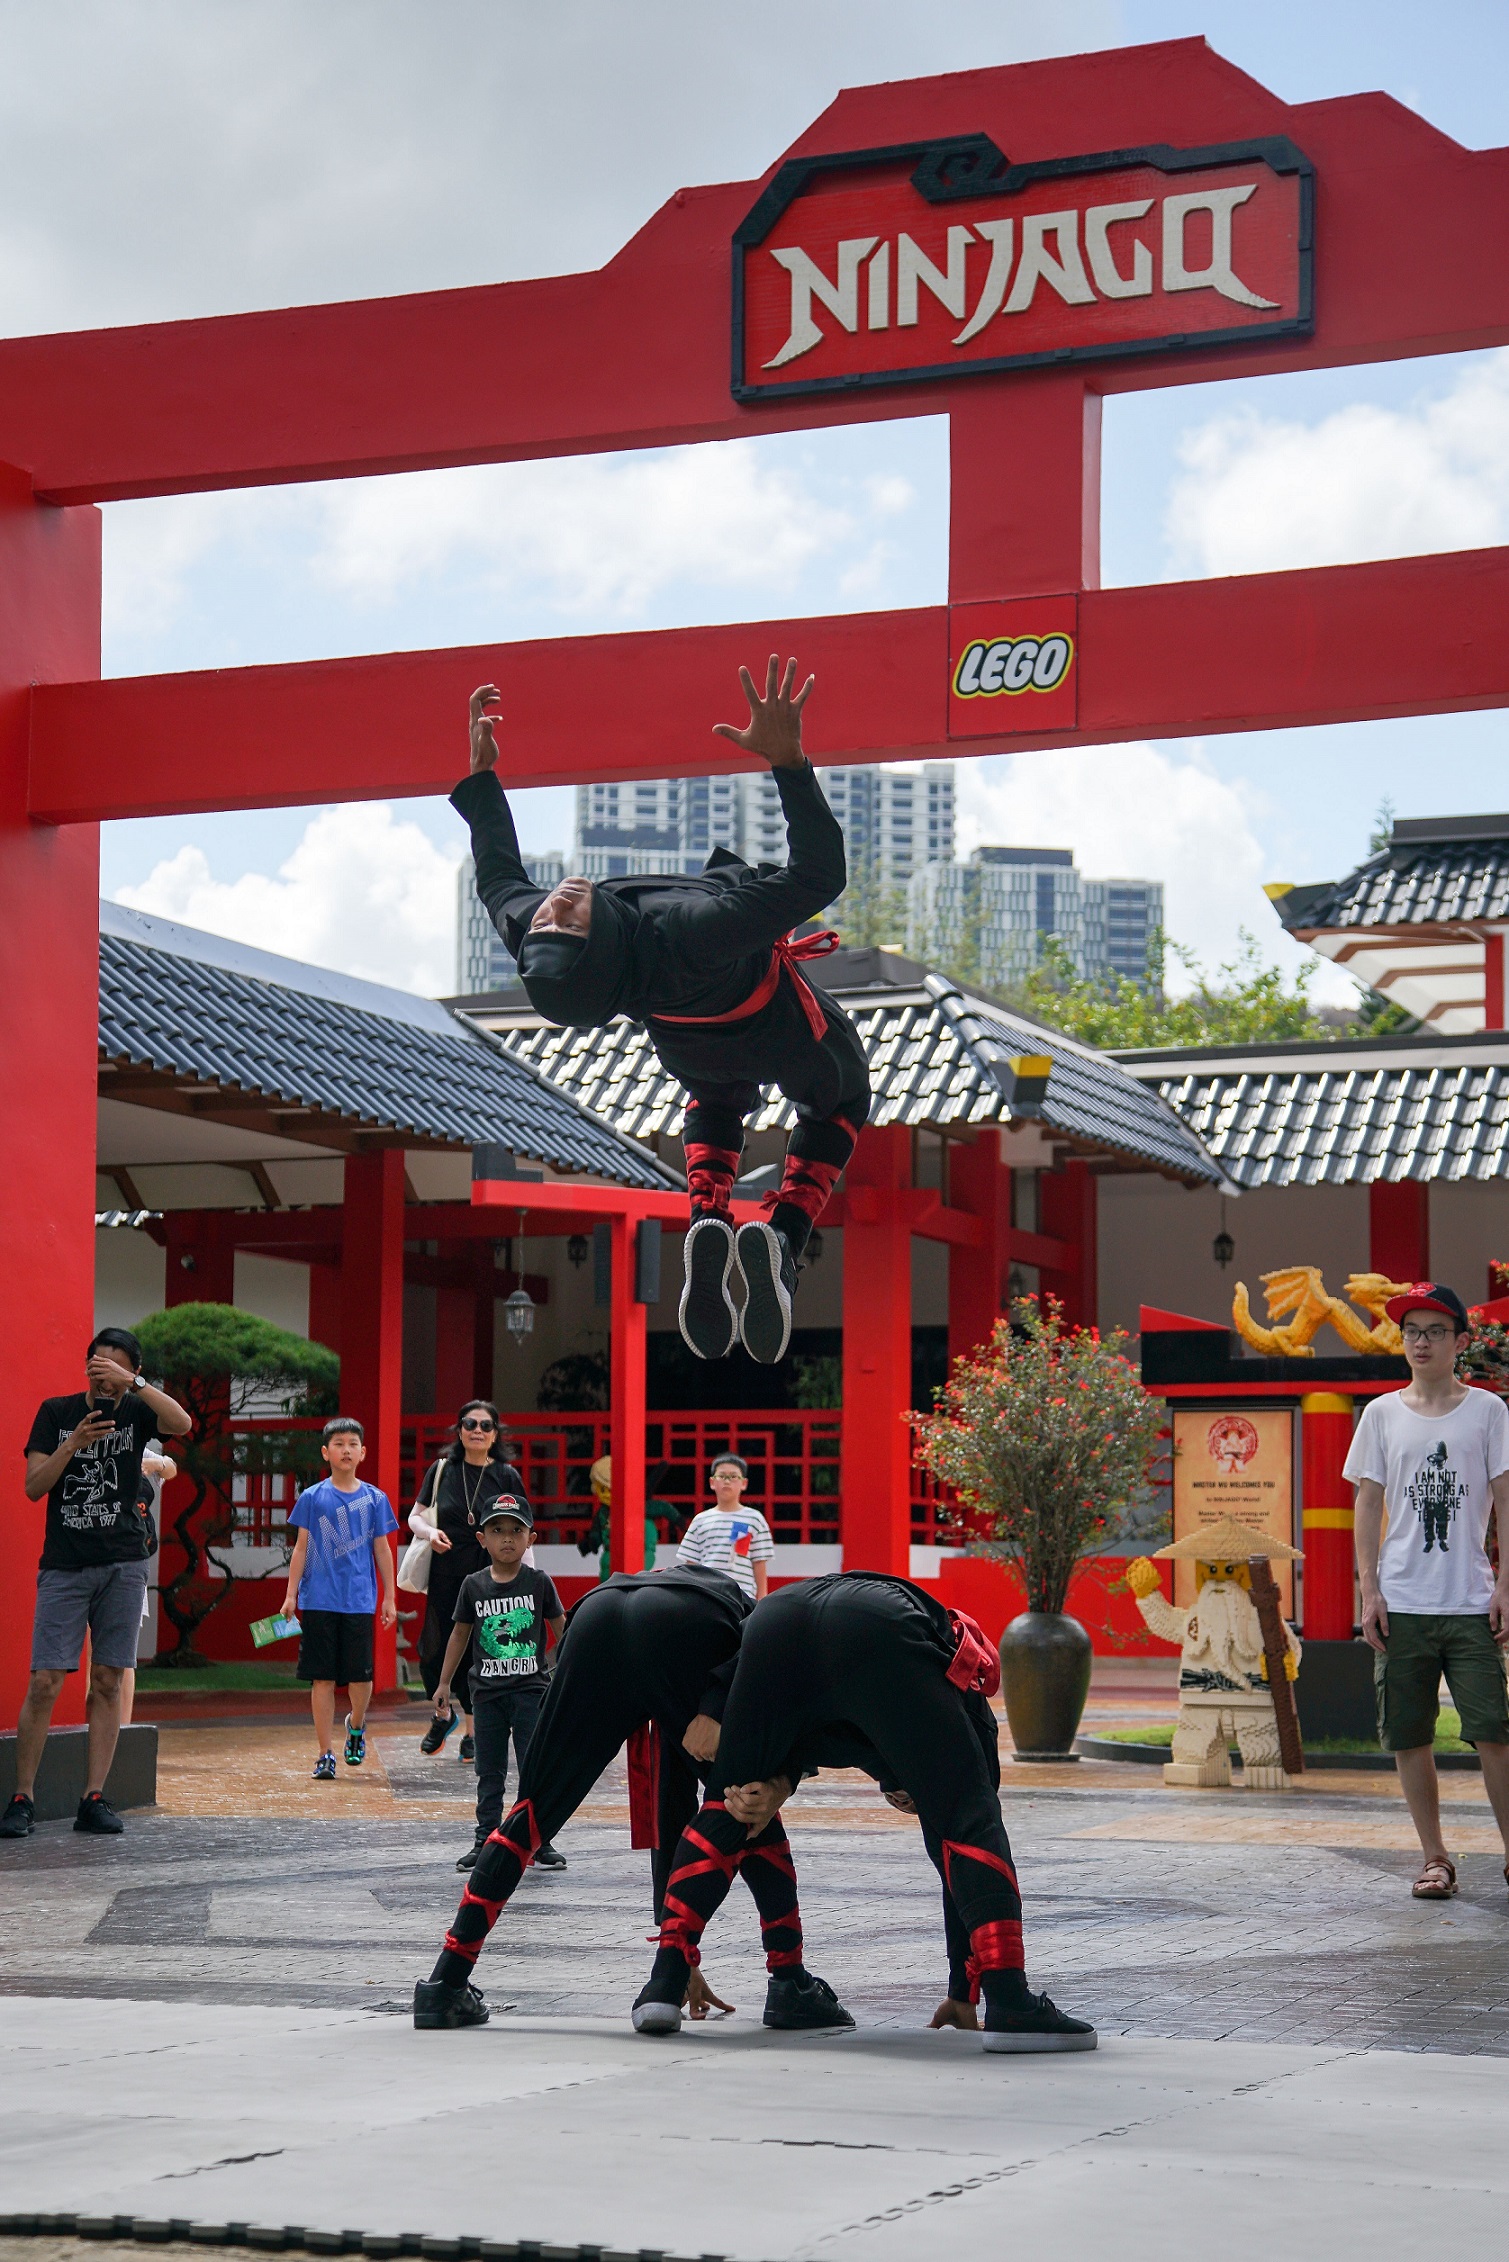 The Ninjas 忍者将首次在马来西亚乐高乐园登场表演，并展示精湛的霹雳舞舞技！-马来西亚乐高乐园提供-